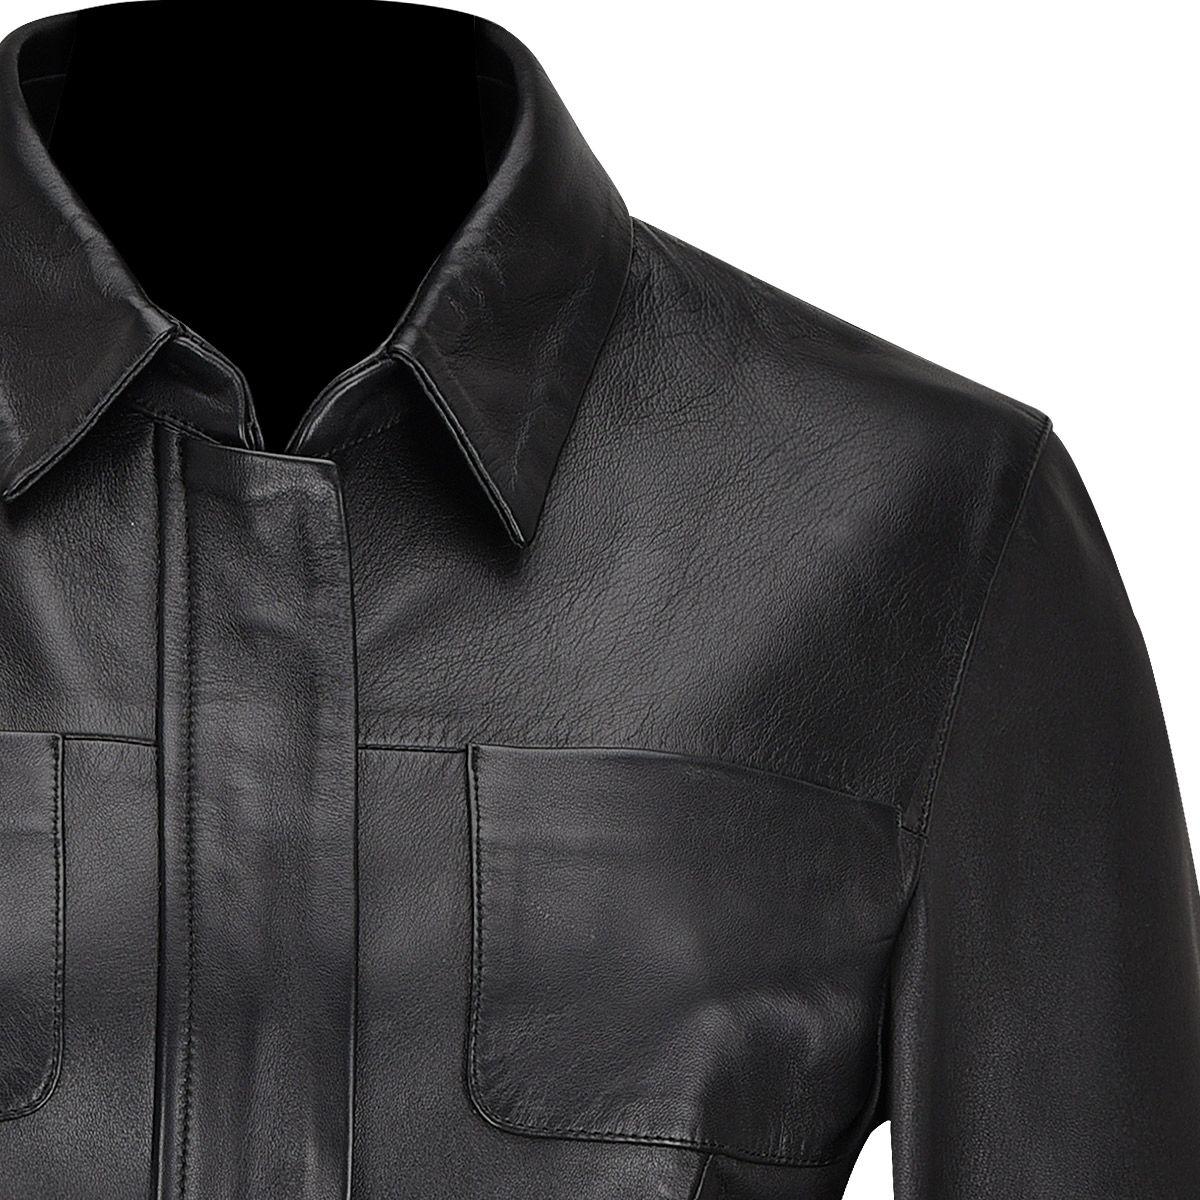 M294BOB - Cuadra black dress casual fashion sheepskin leather jacket for women-Kuet.us